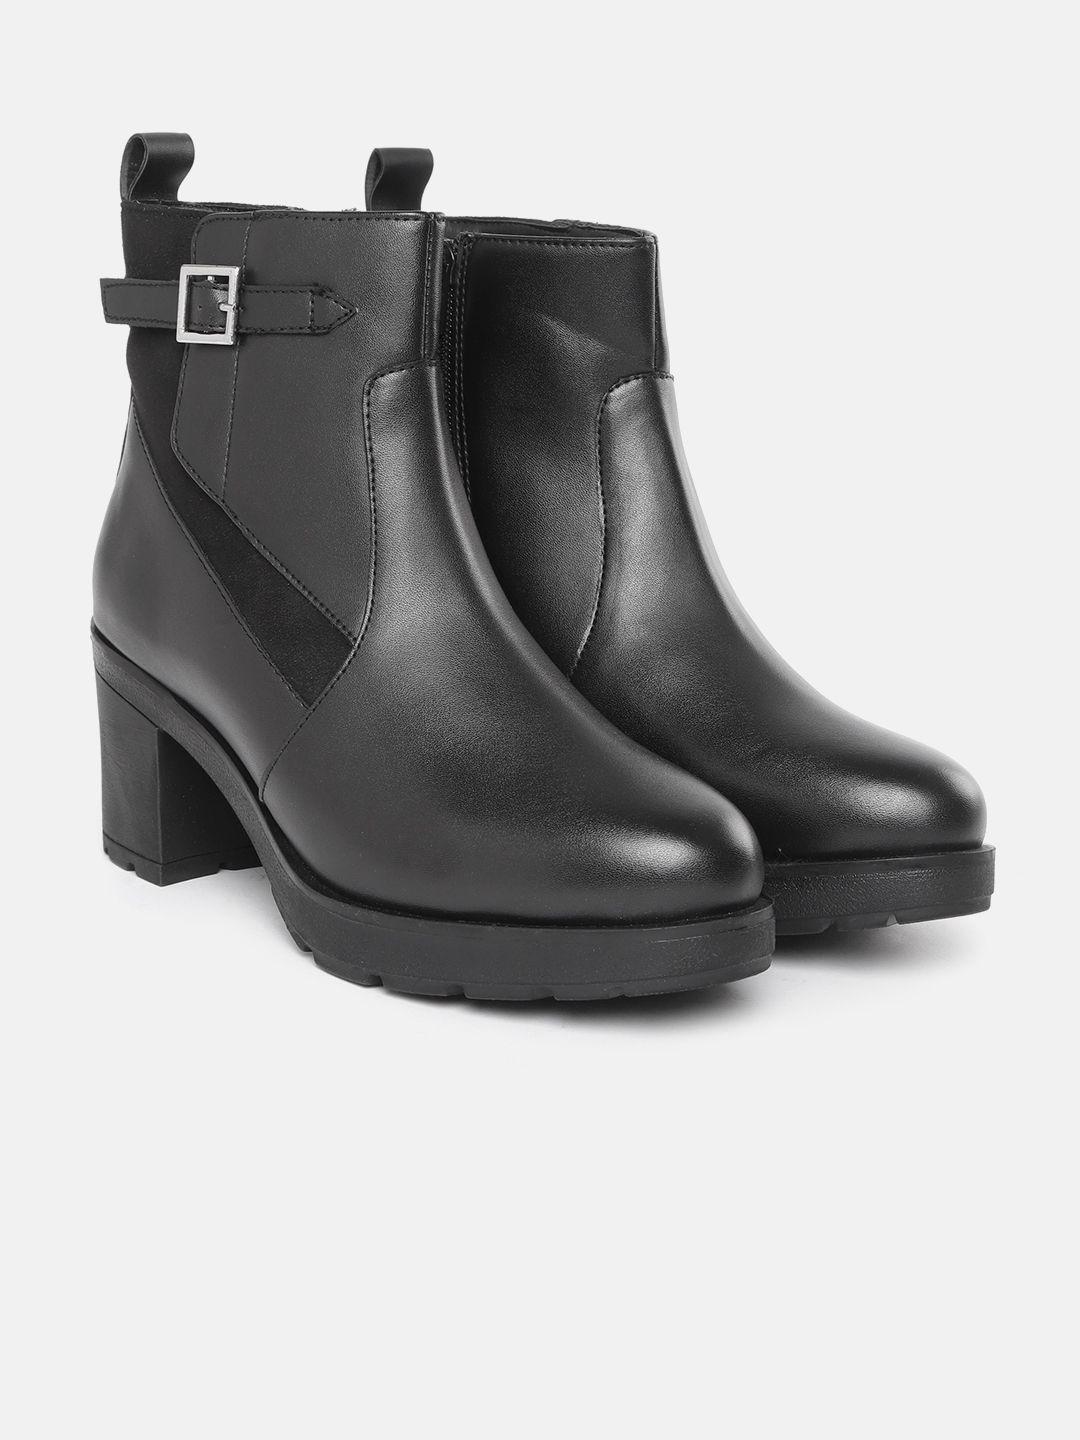 mast & harbour women black solid regular mid-top round toe boots